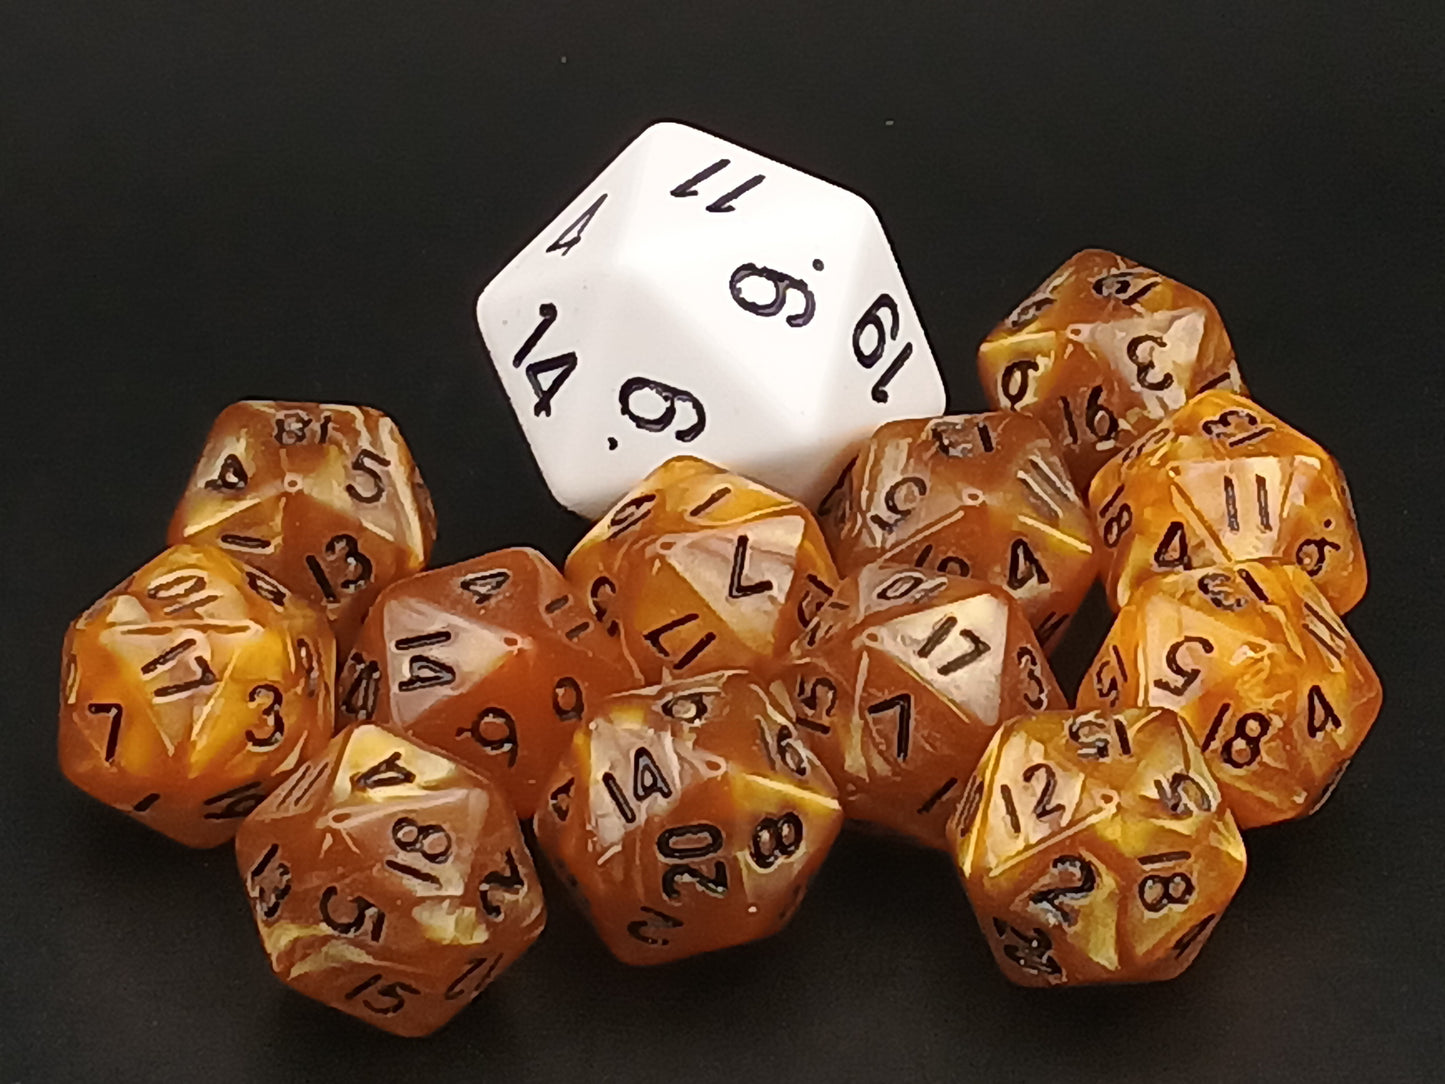 Set of 12 20-sided mini dice